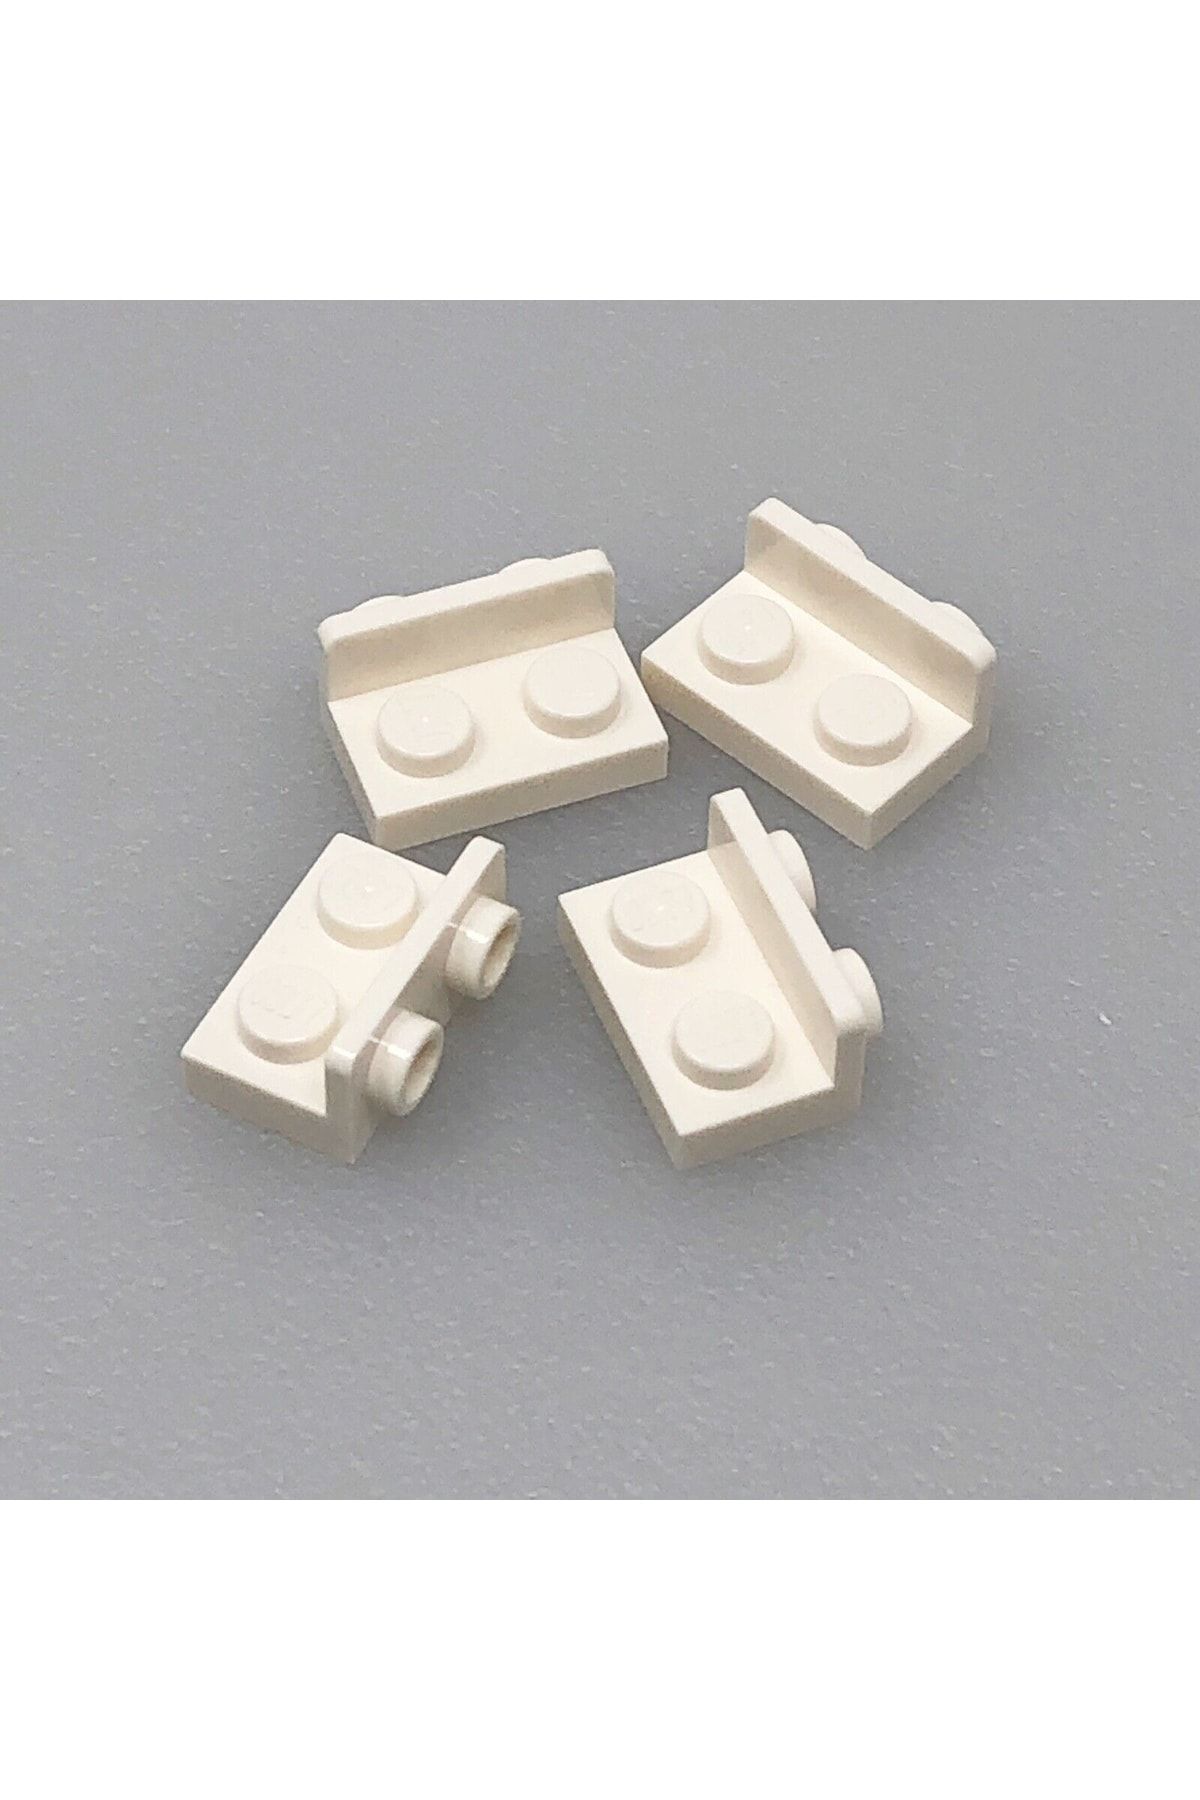 LEGO براکت قطعه اتصال معکوس Moc Creator اصلی 1 X 2 - سفید 4 تکه براکت99780سفید ارسال خواهد شد